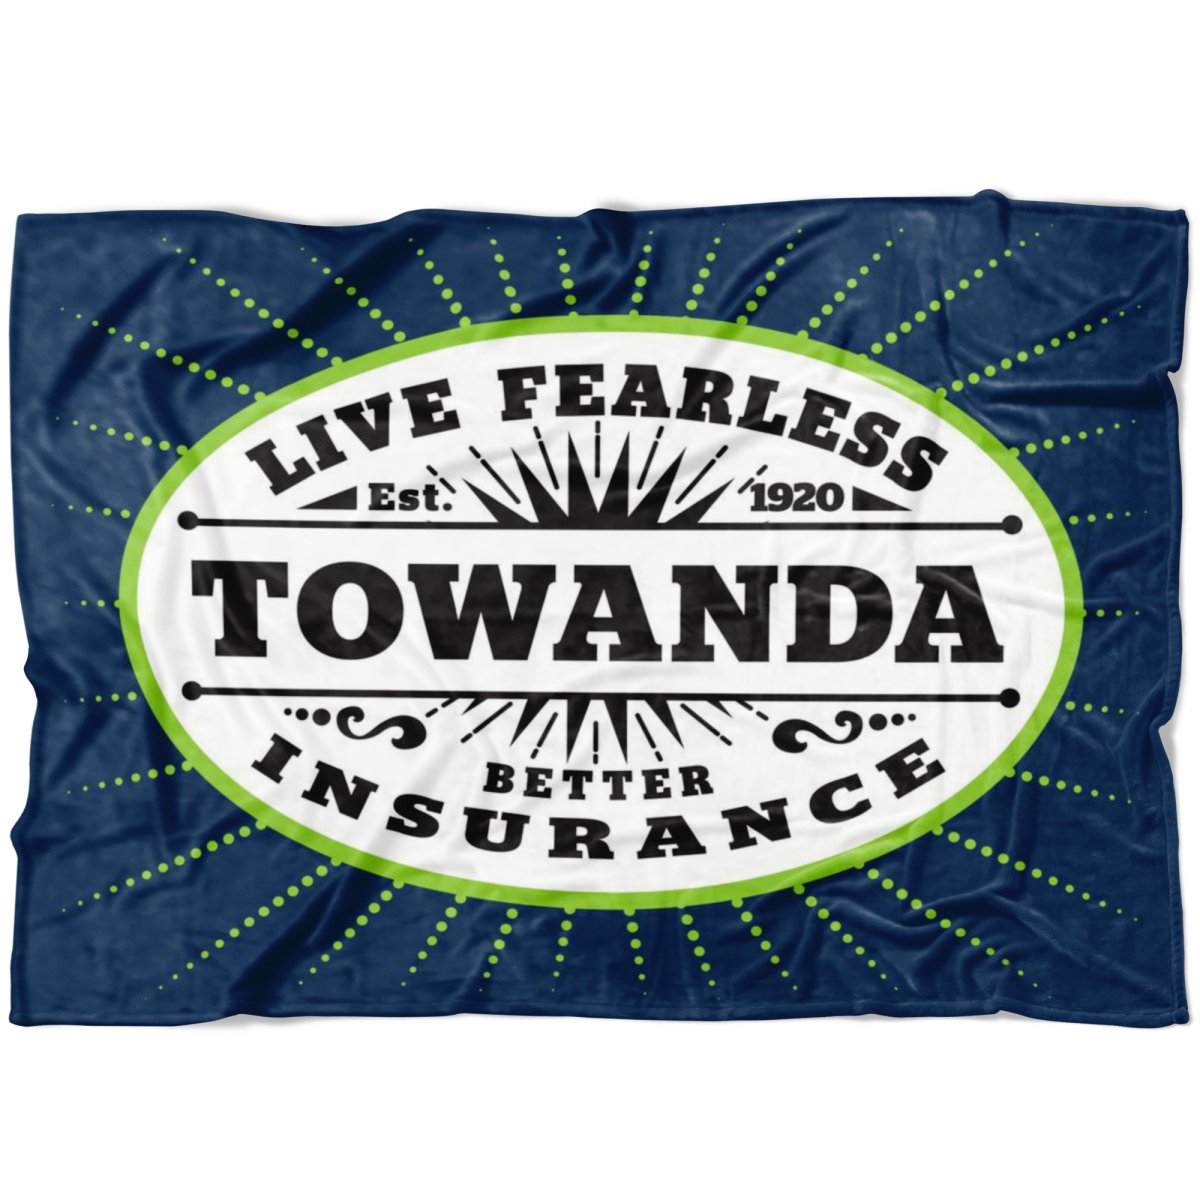 TOWANDA Live Fearless - Fleece Super Soft Blanket | Better Insurance, Fried Green Tomatoes